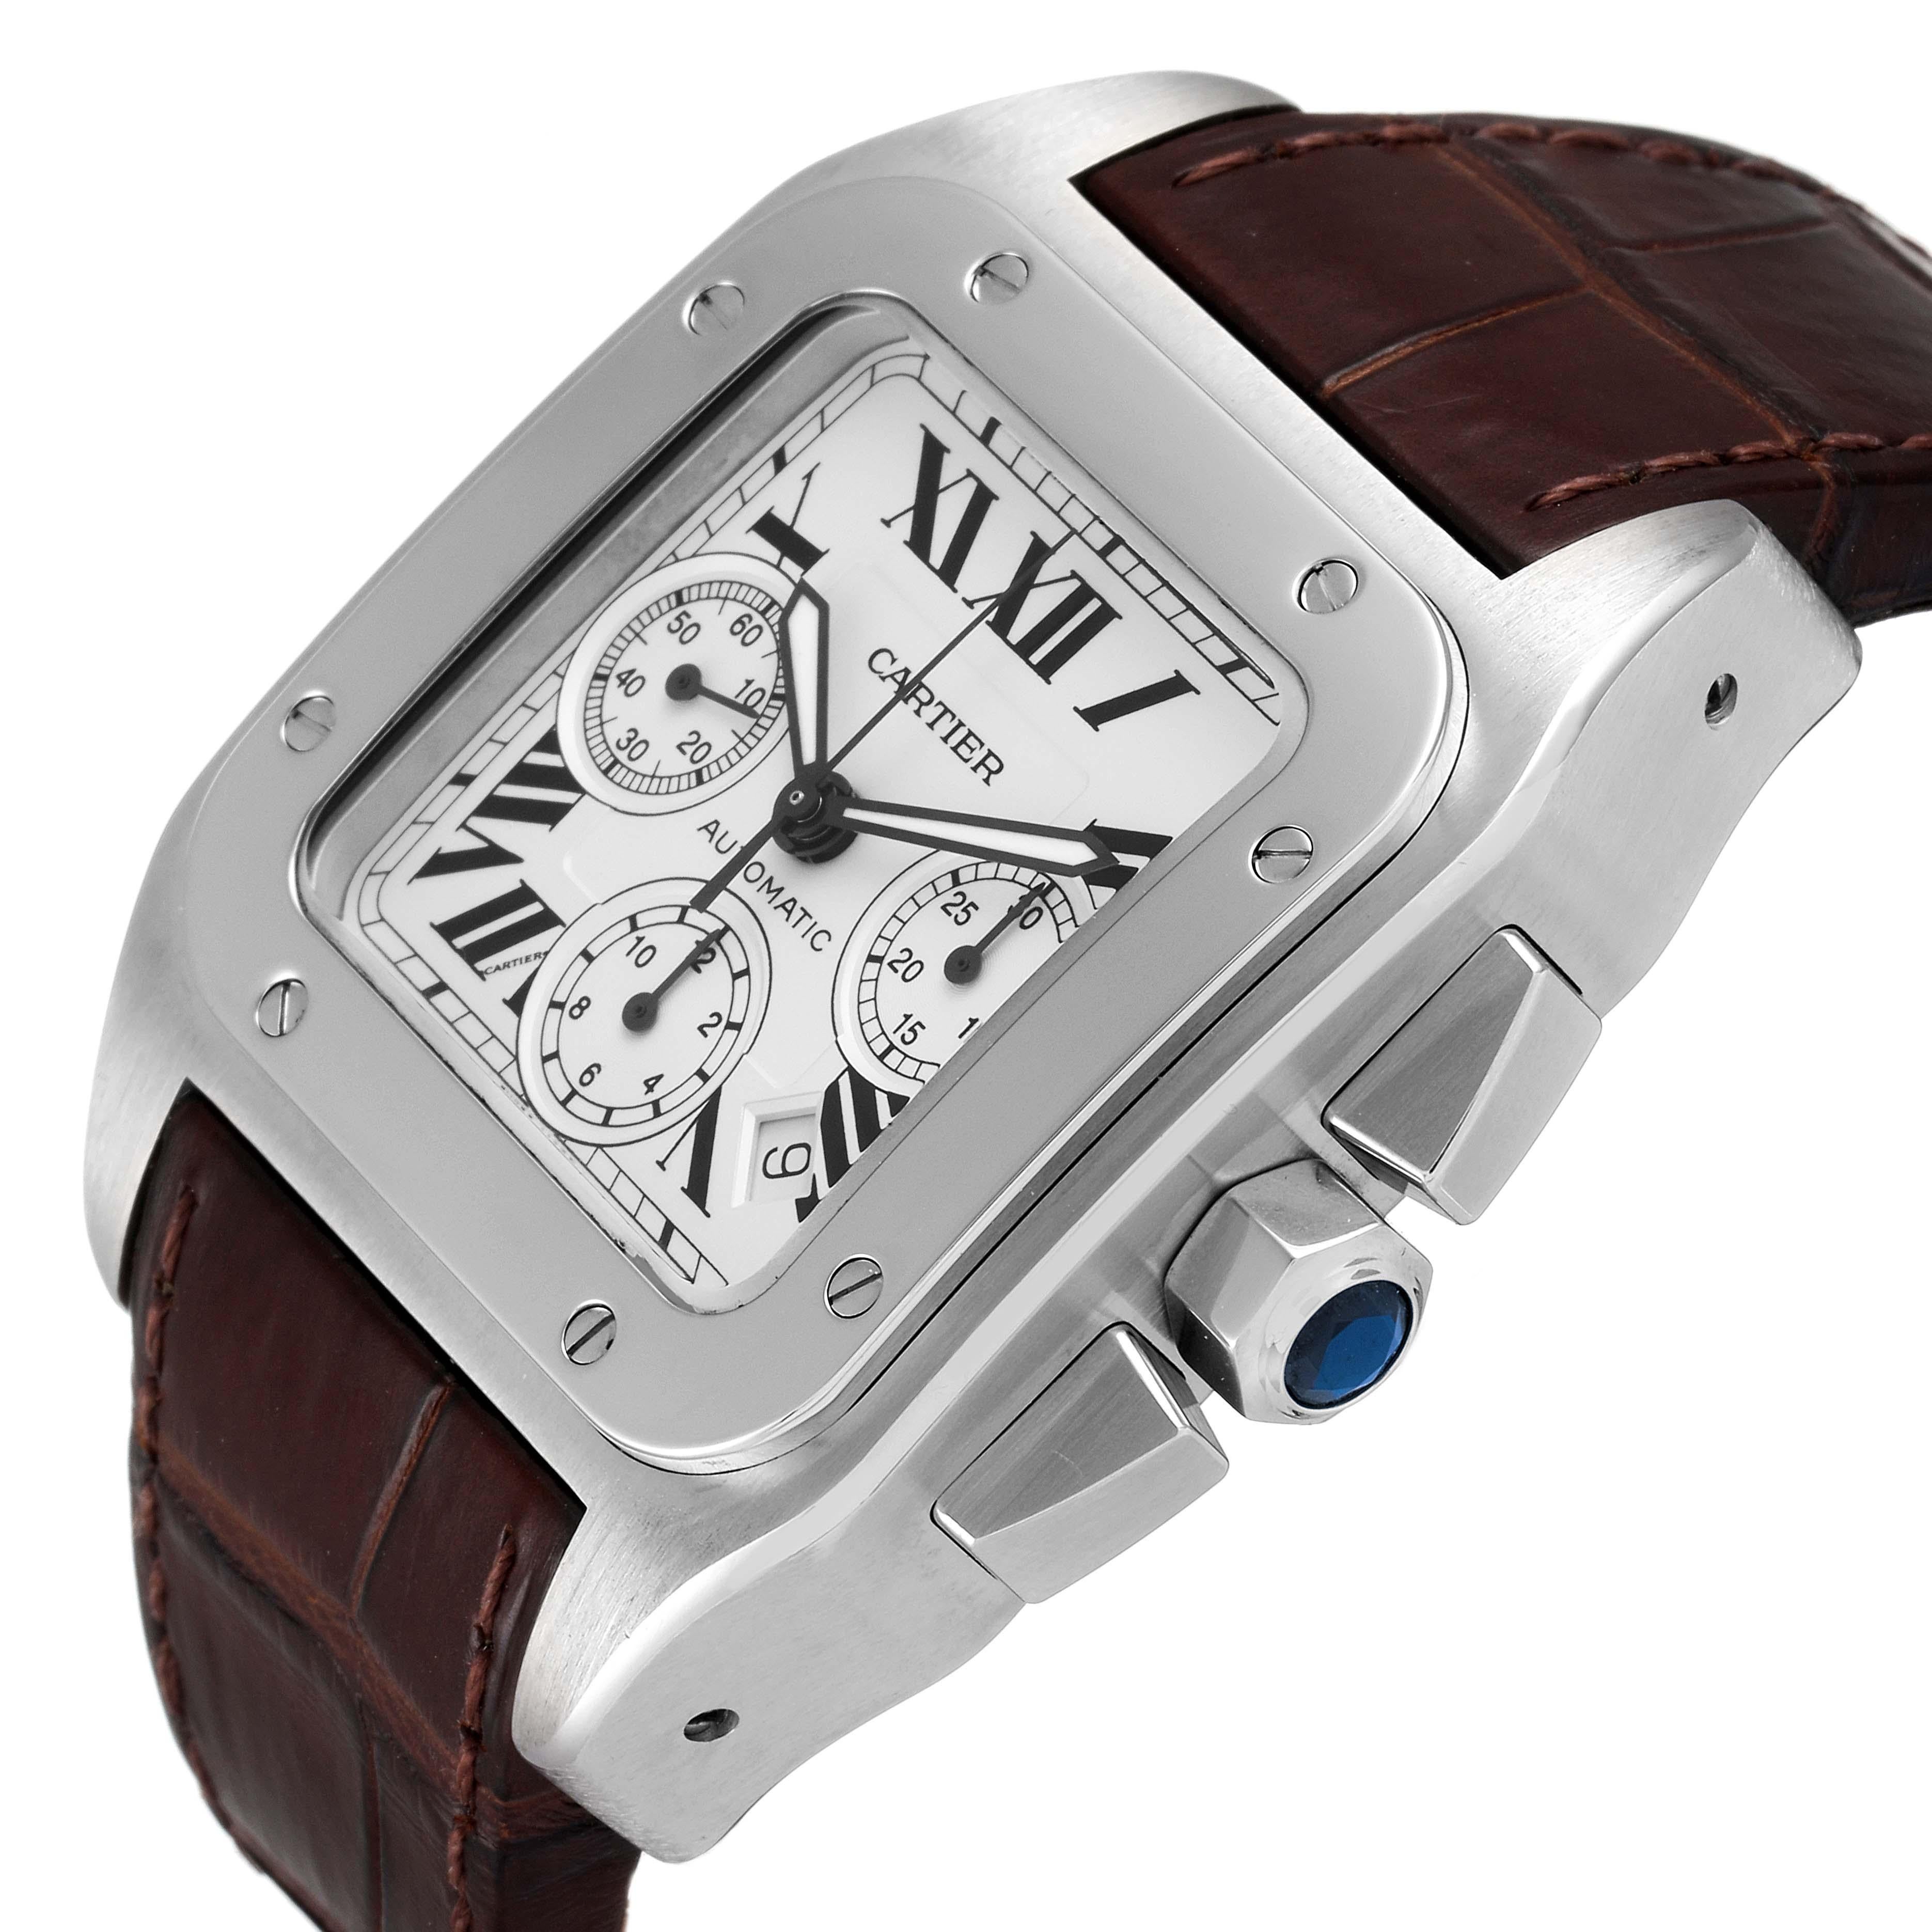 Cartier Santos 100 XL Silver Dial Brown Strap Chronograph Watch W20090X8 1